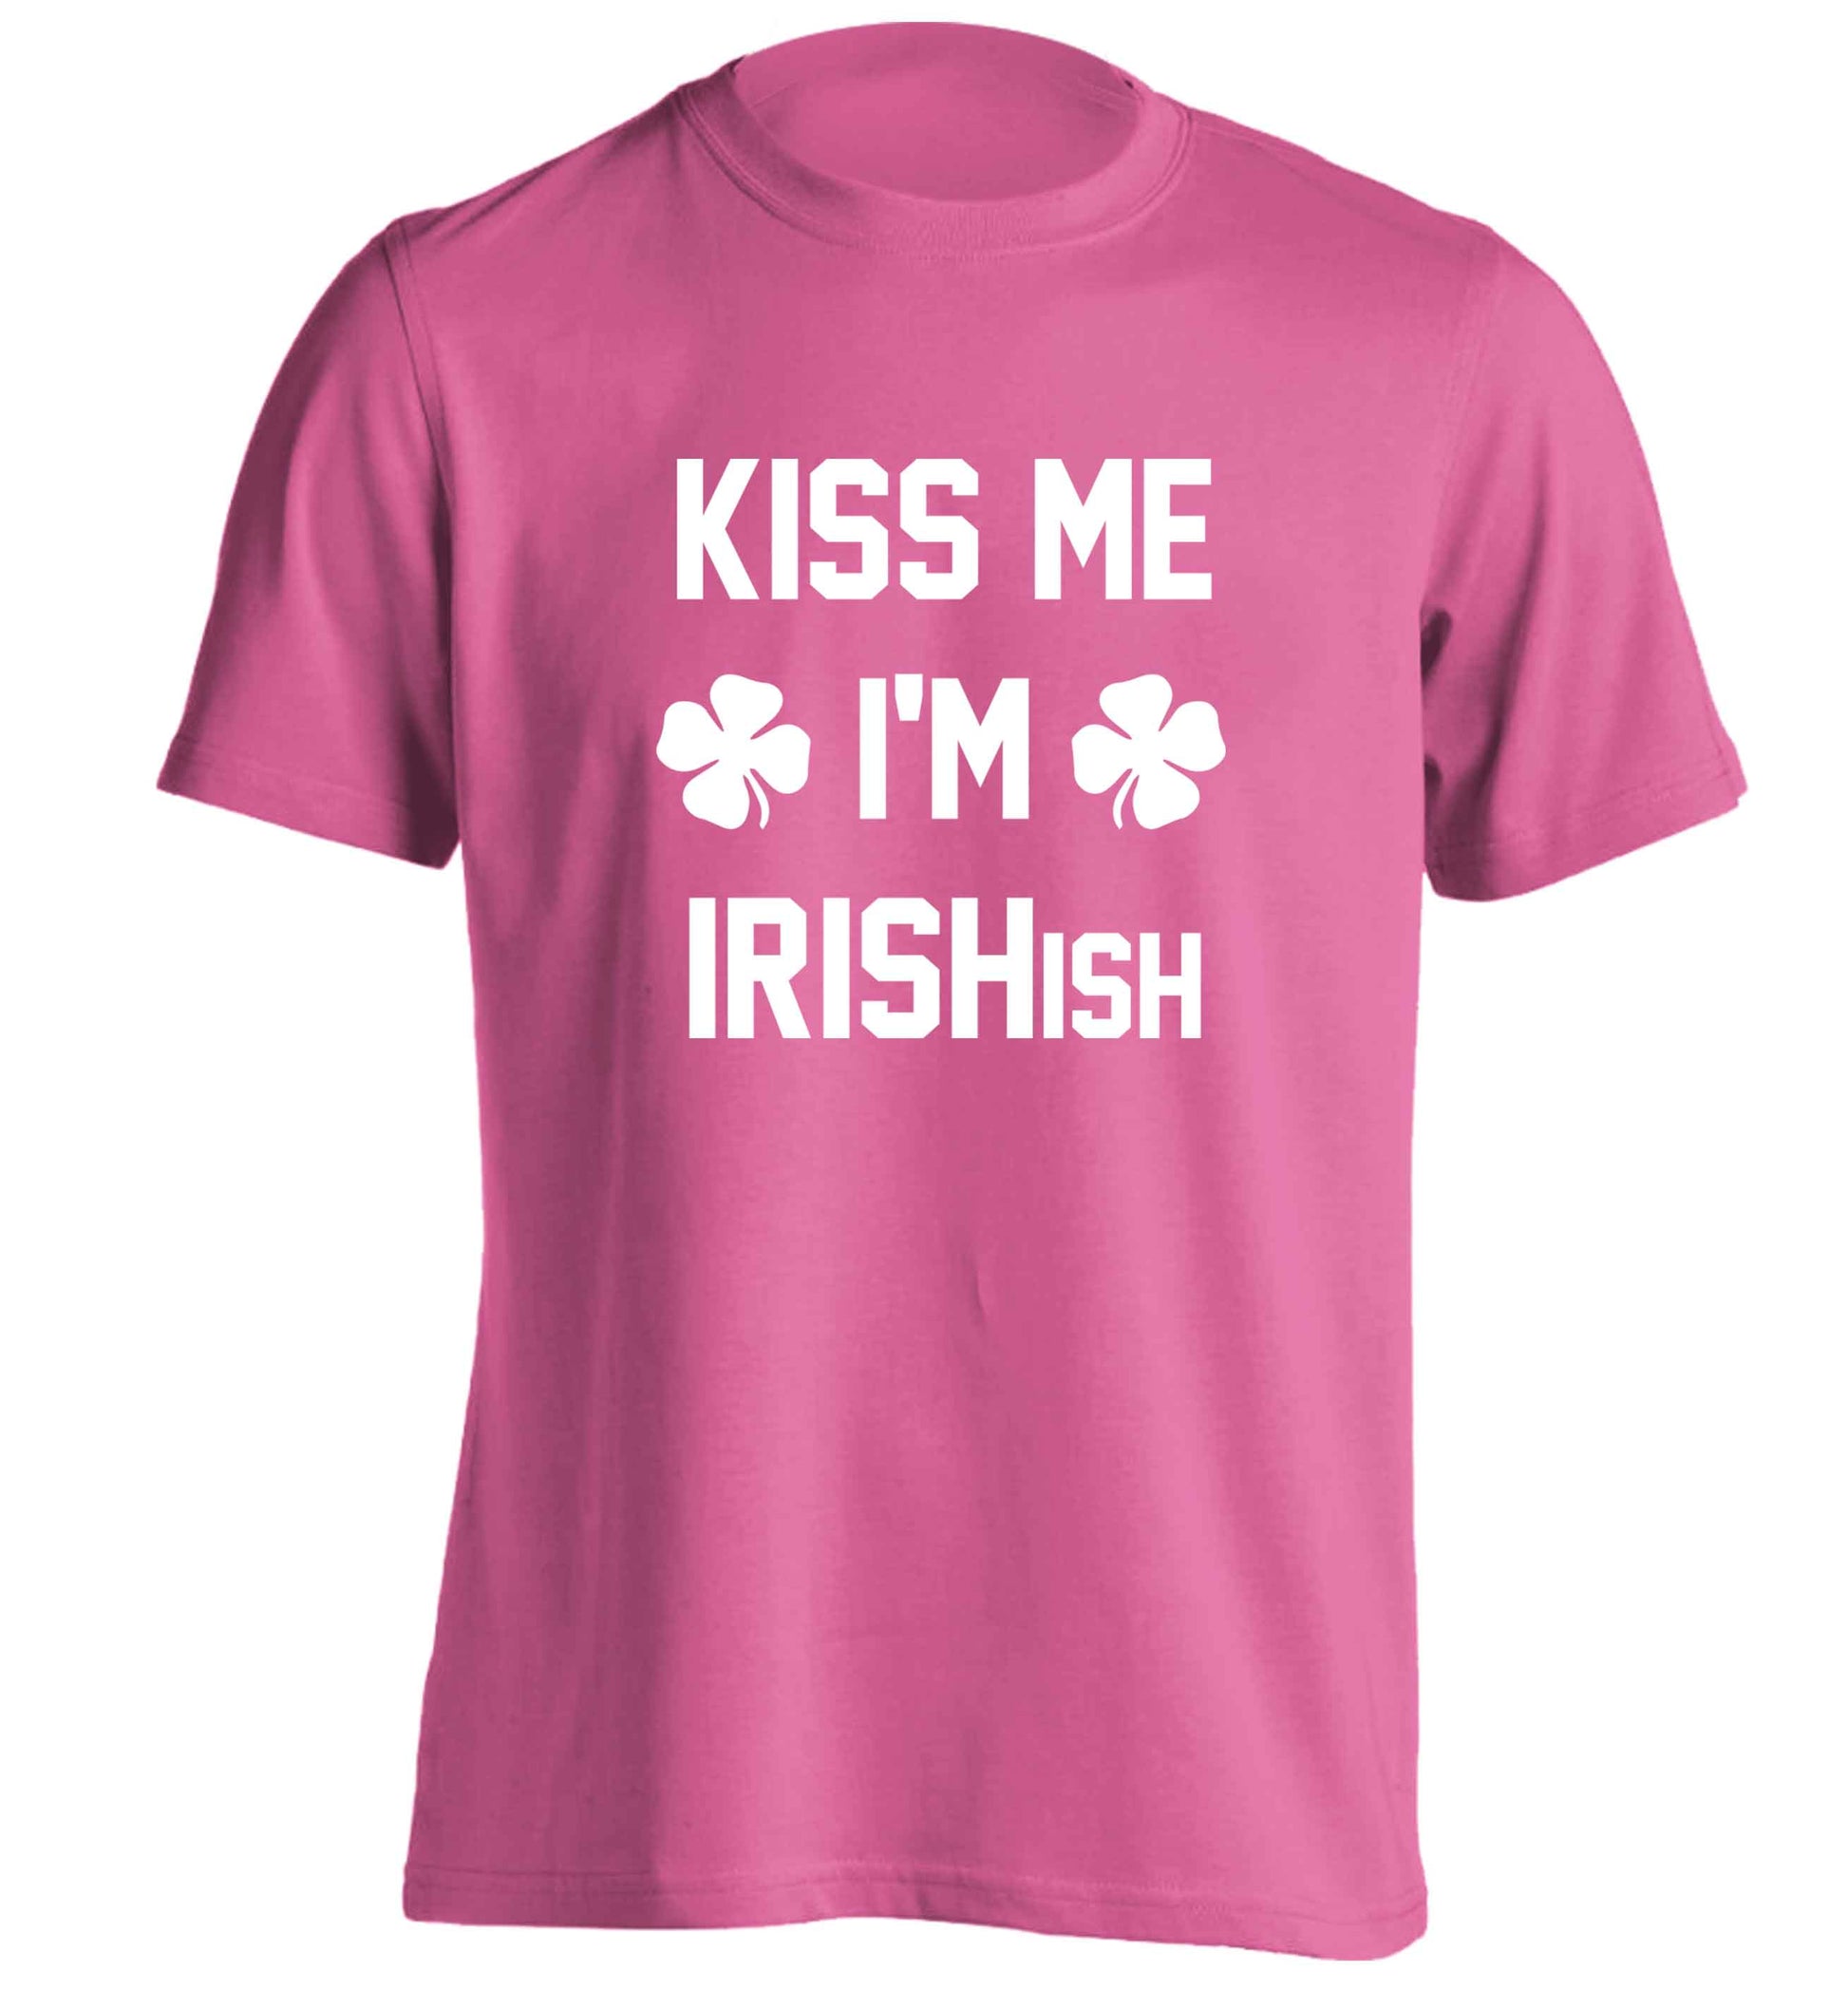 Kiss me I'm Irishish adults unisex pink Tshirt 2XL